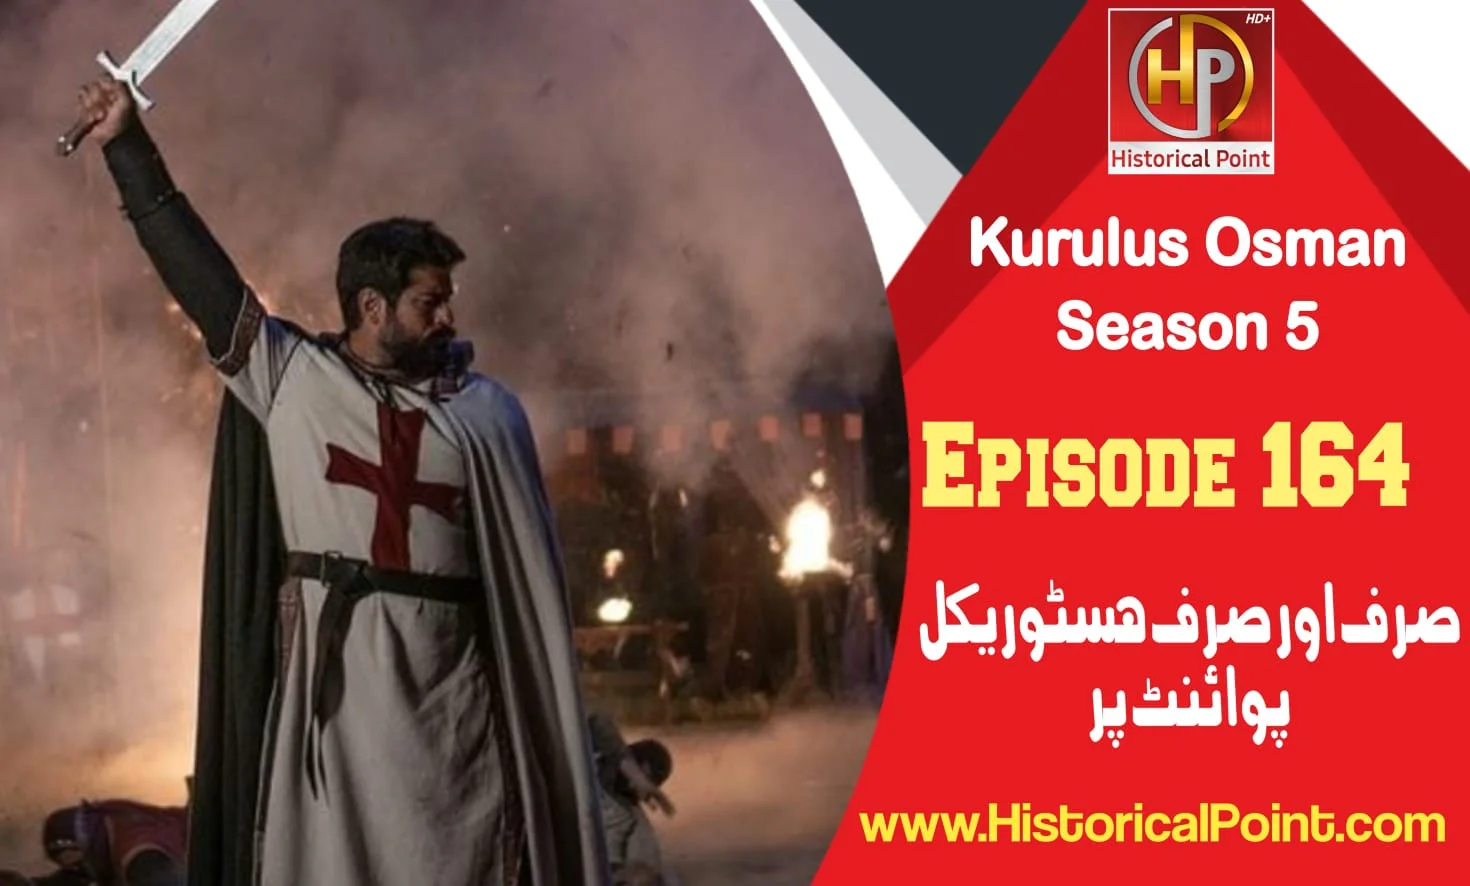 Kurulus Osman Episode 164 in Urdu Subtitles